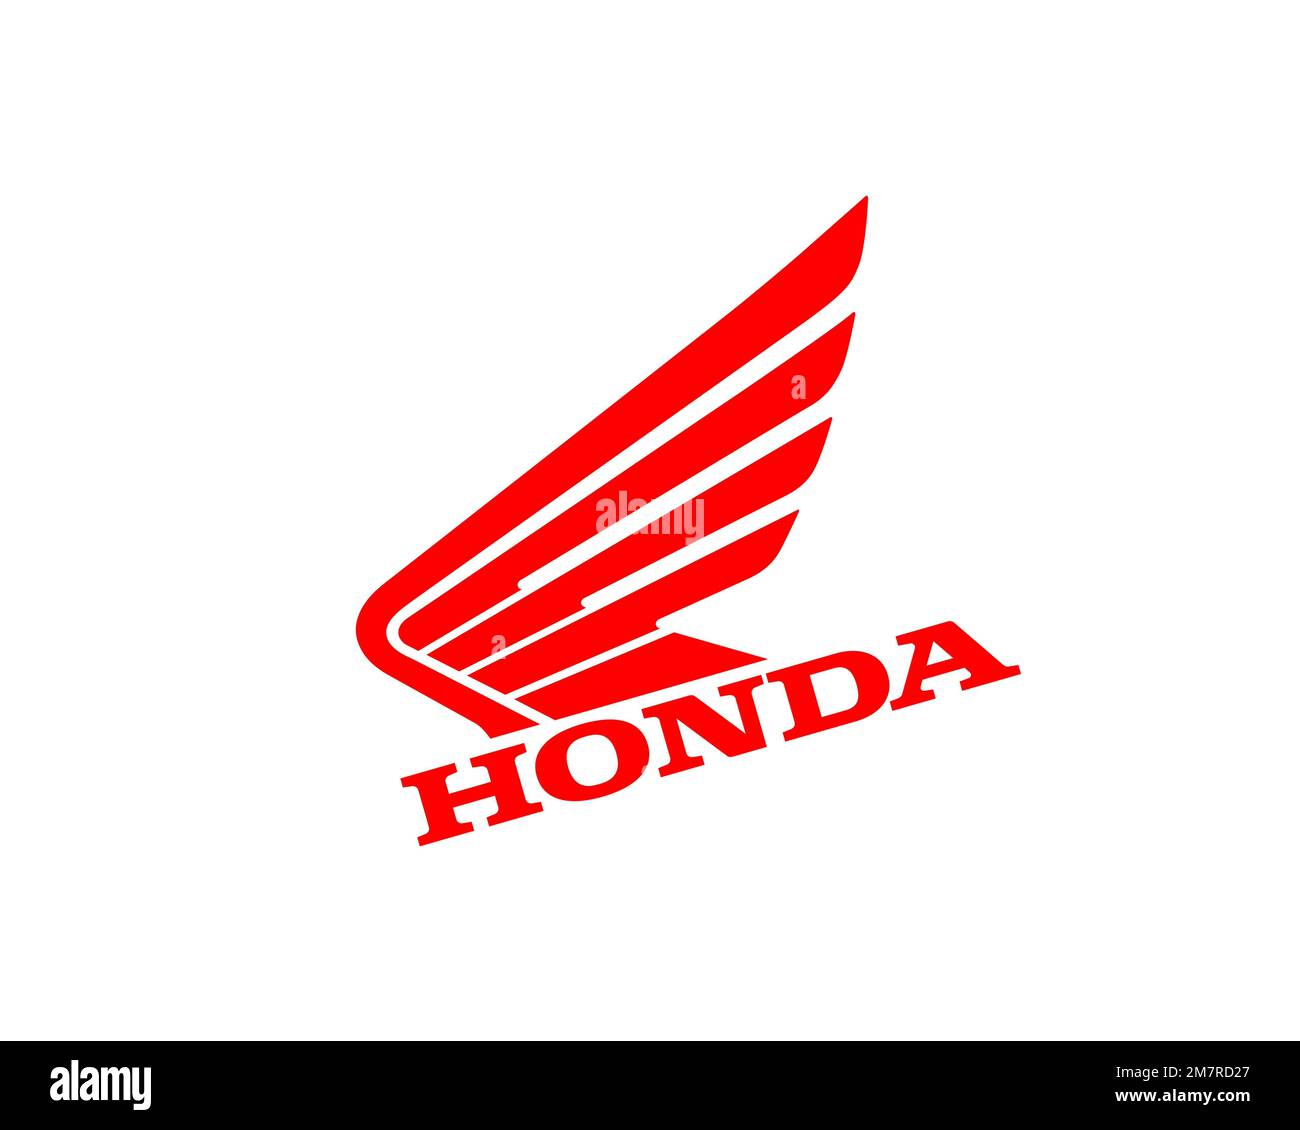 Honda Motorcycle and Scooter India, Rotated Logo, White Background Stock Photo